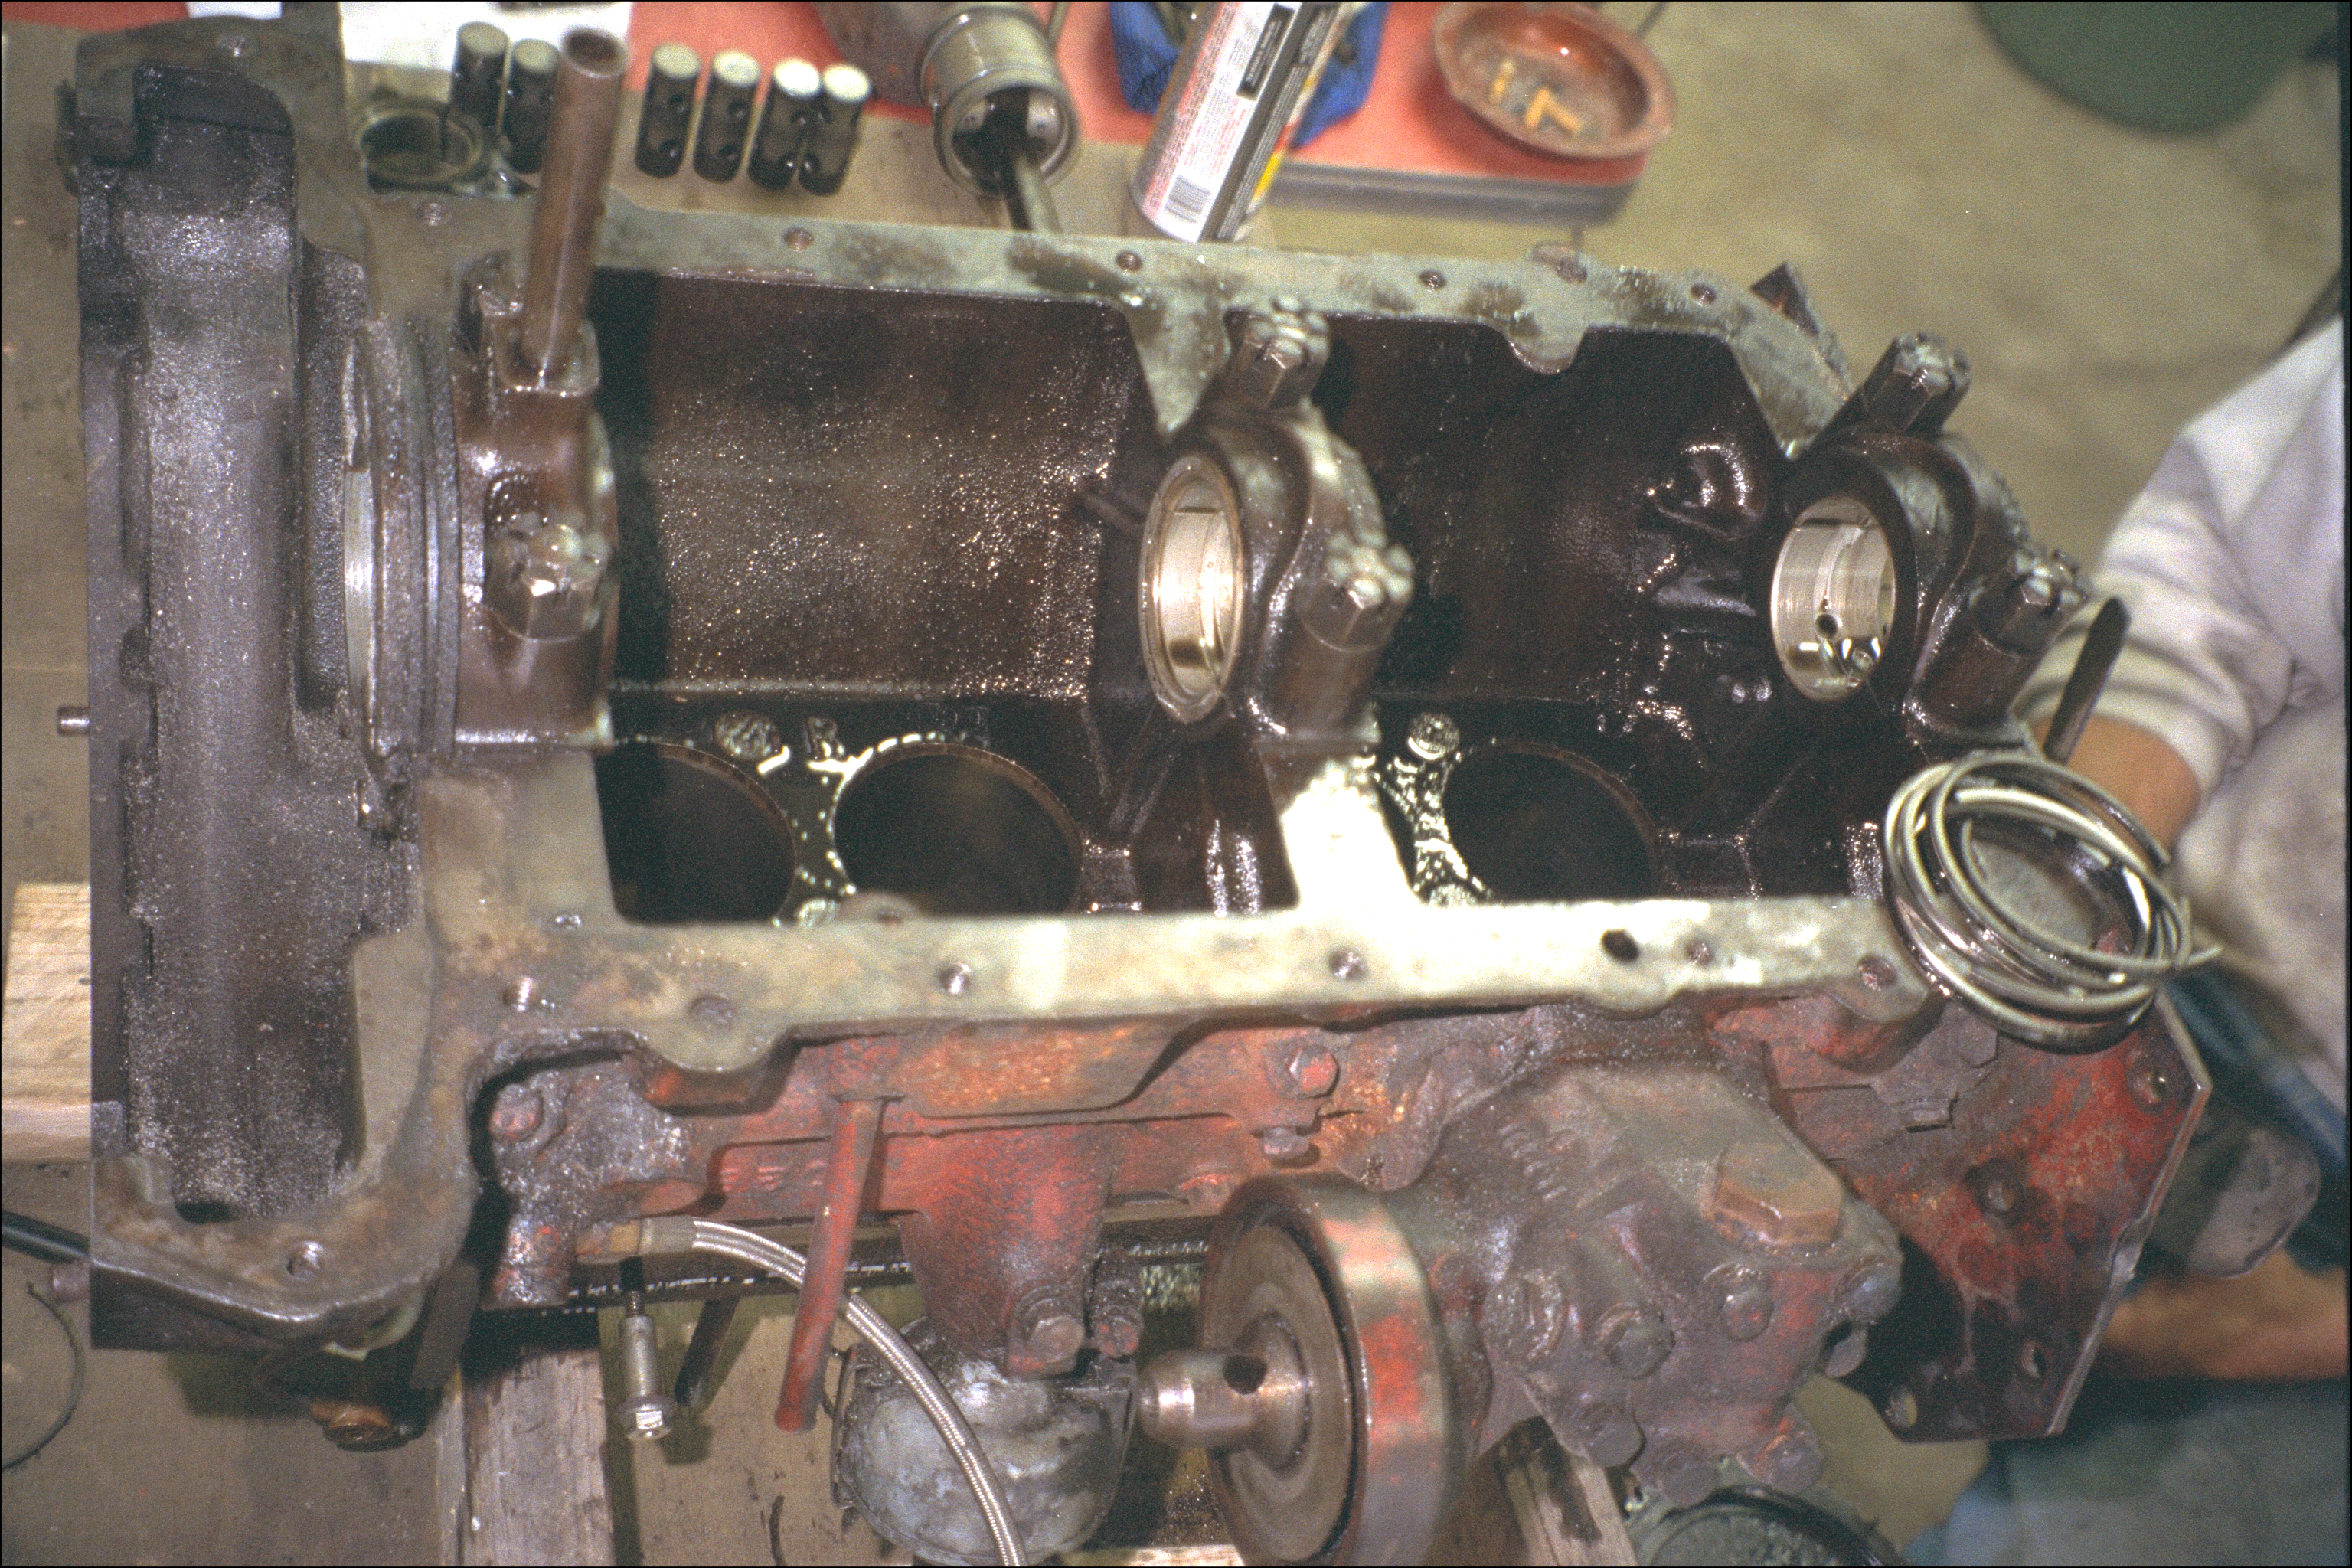 Engine interior, viewed from bottom